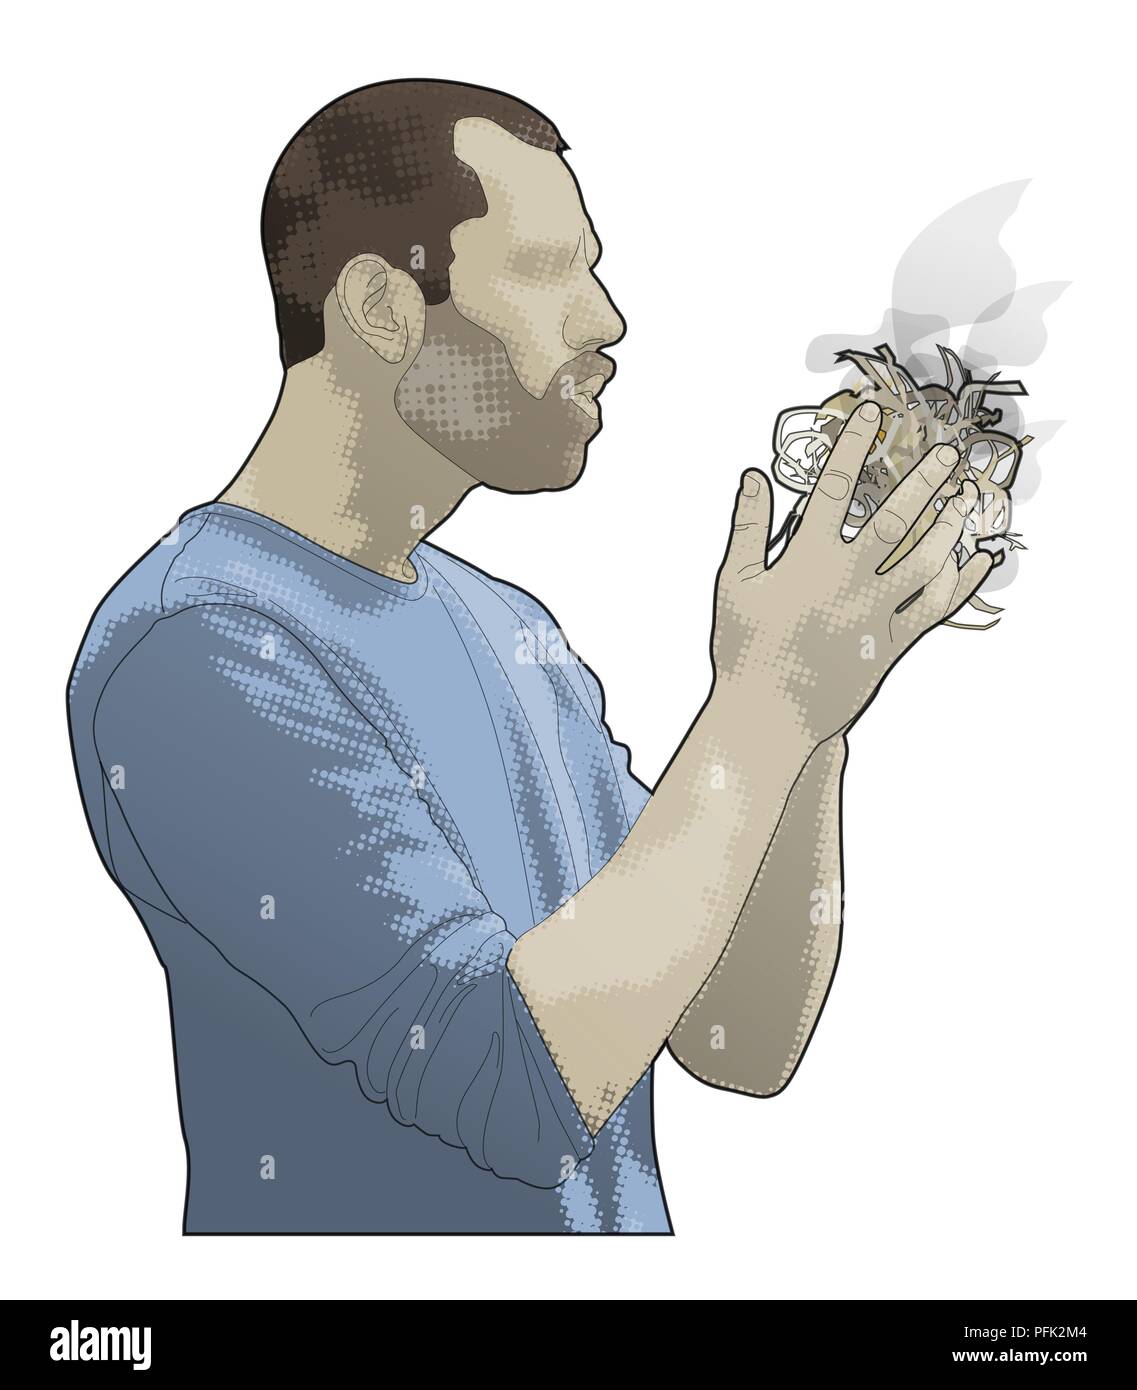 Digital illustration of man blowing on tinder bundle held in hands Stock Photo